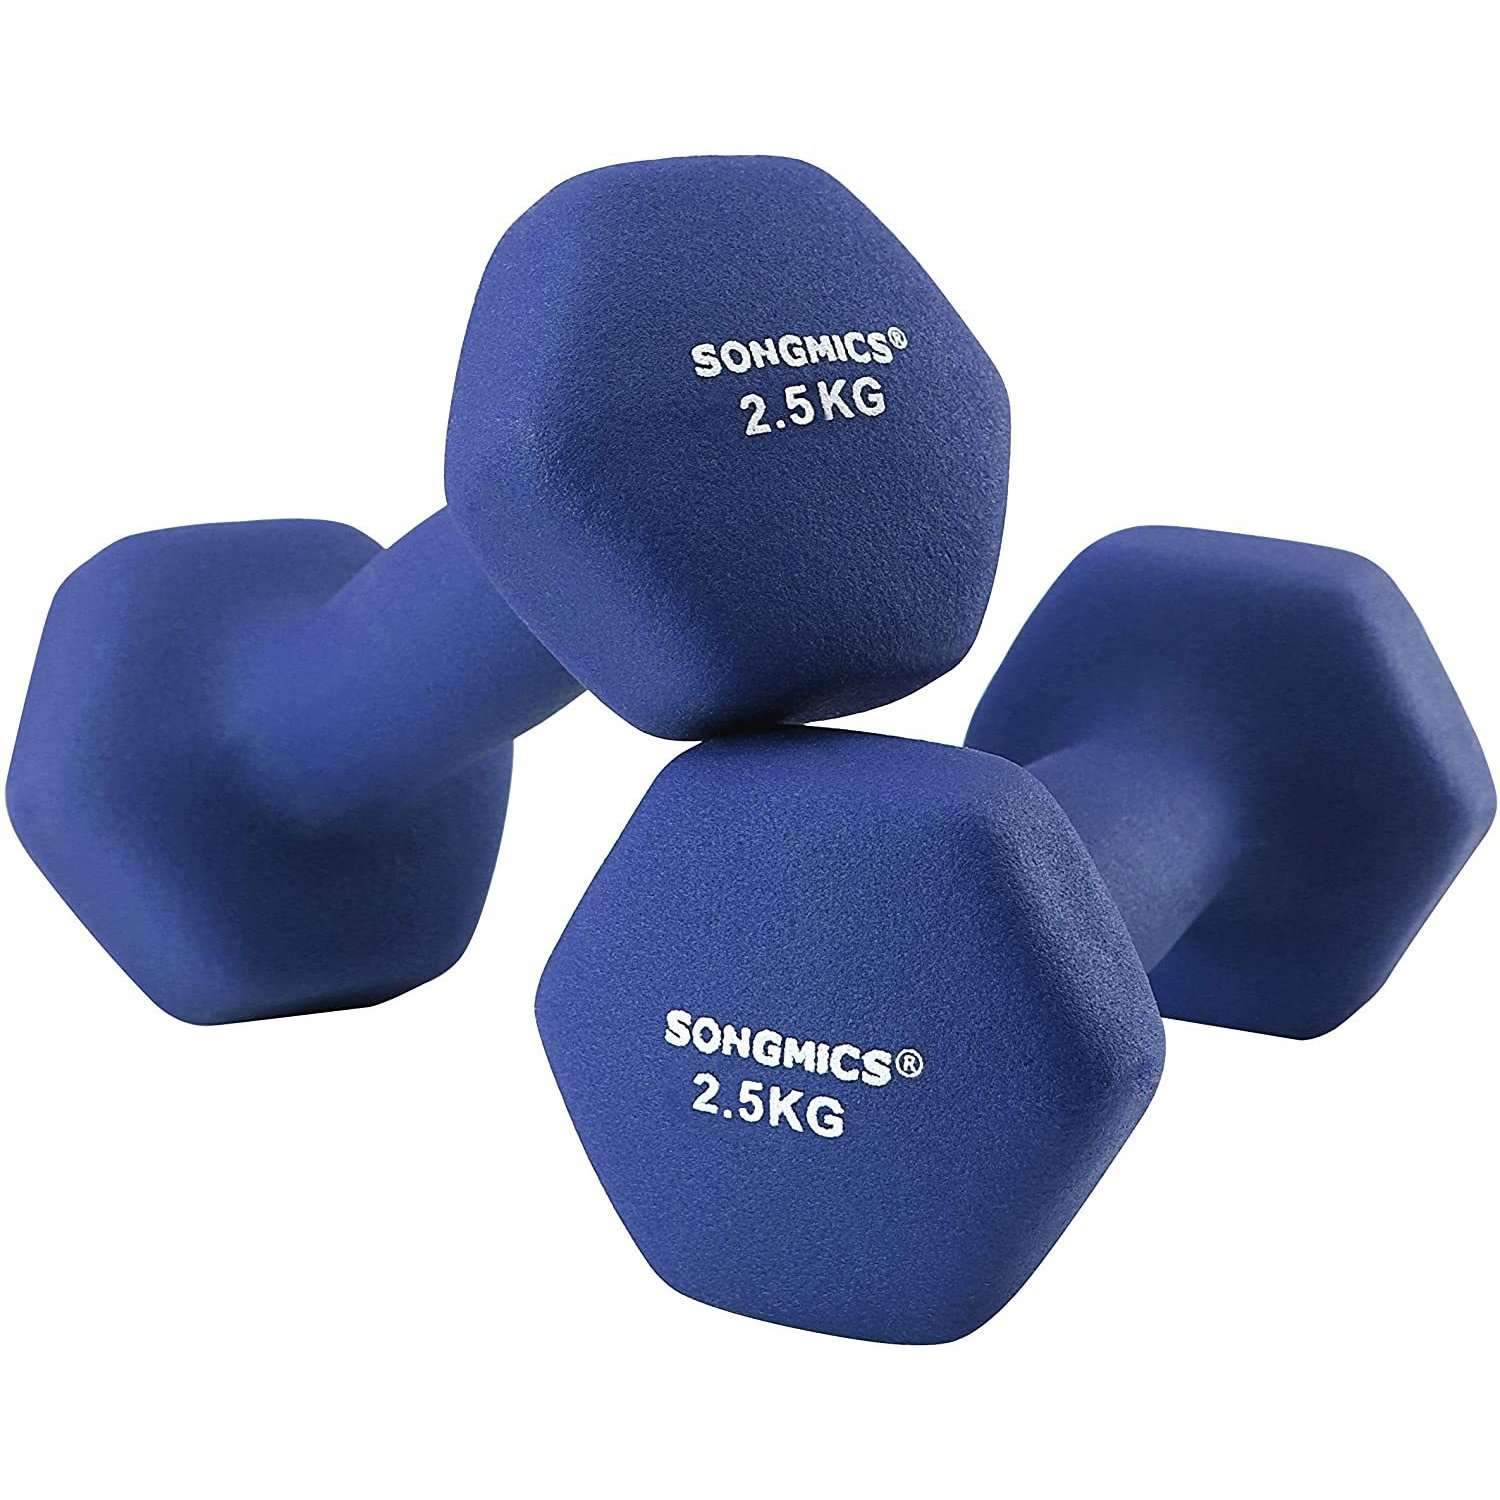 Nancy's Dumbbells Set - 2.5 kg per Dumbell - Blue Dumbells - Weights and Dumbbells - 2 Pieces